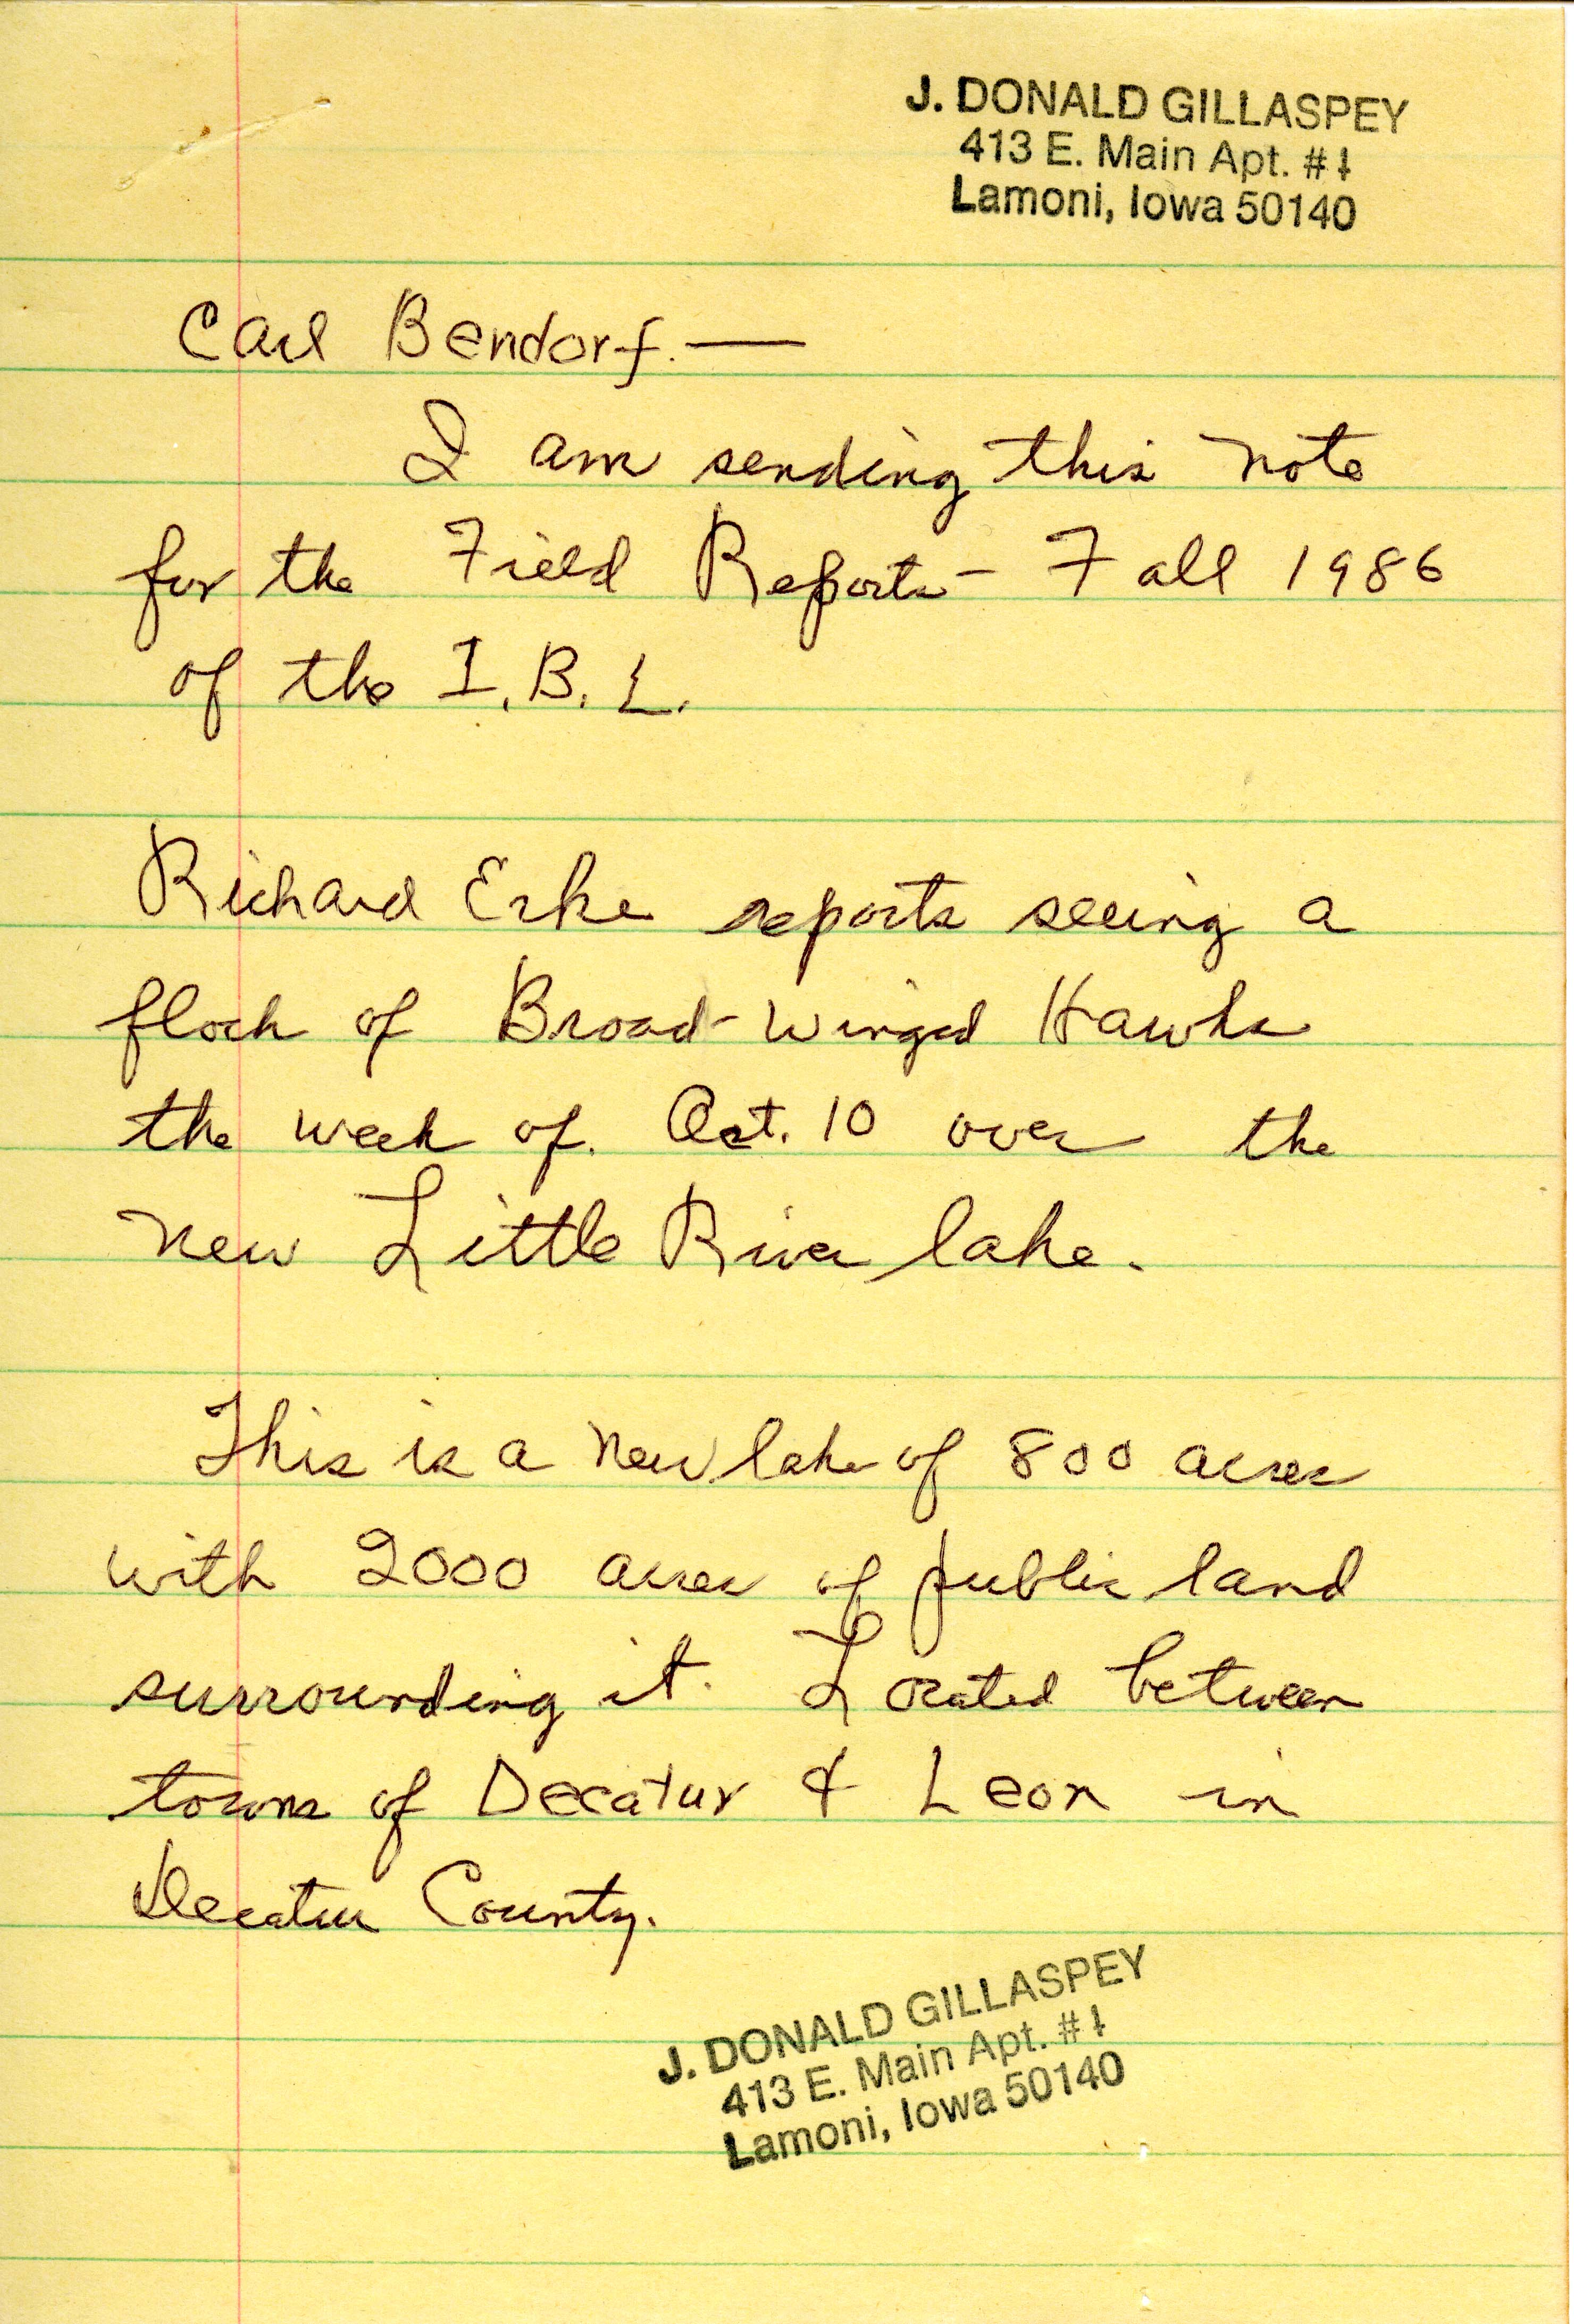 J. Donald Gillaspey letter to Carl J. Bendorf regarding Broad-winged Hawk sighting, fall 1986